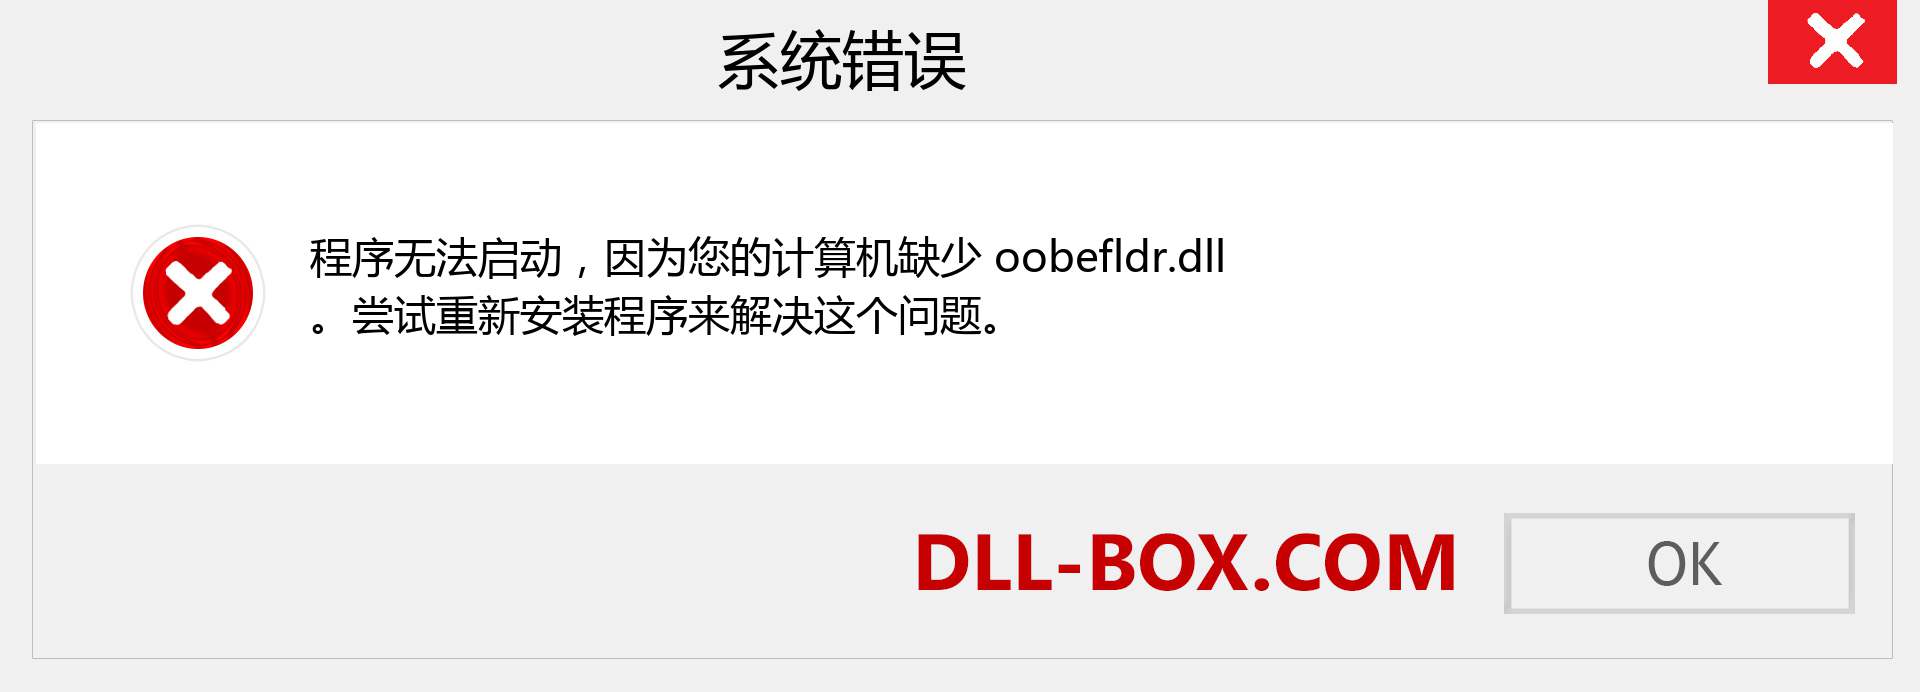 oobefldr.dll 文件丢失？。 适用于 Windows 7、8、10 的下载 - 修复 Windows、照片、图像上的 oobefldr dll 丢失错误